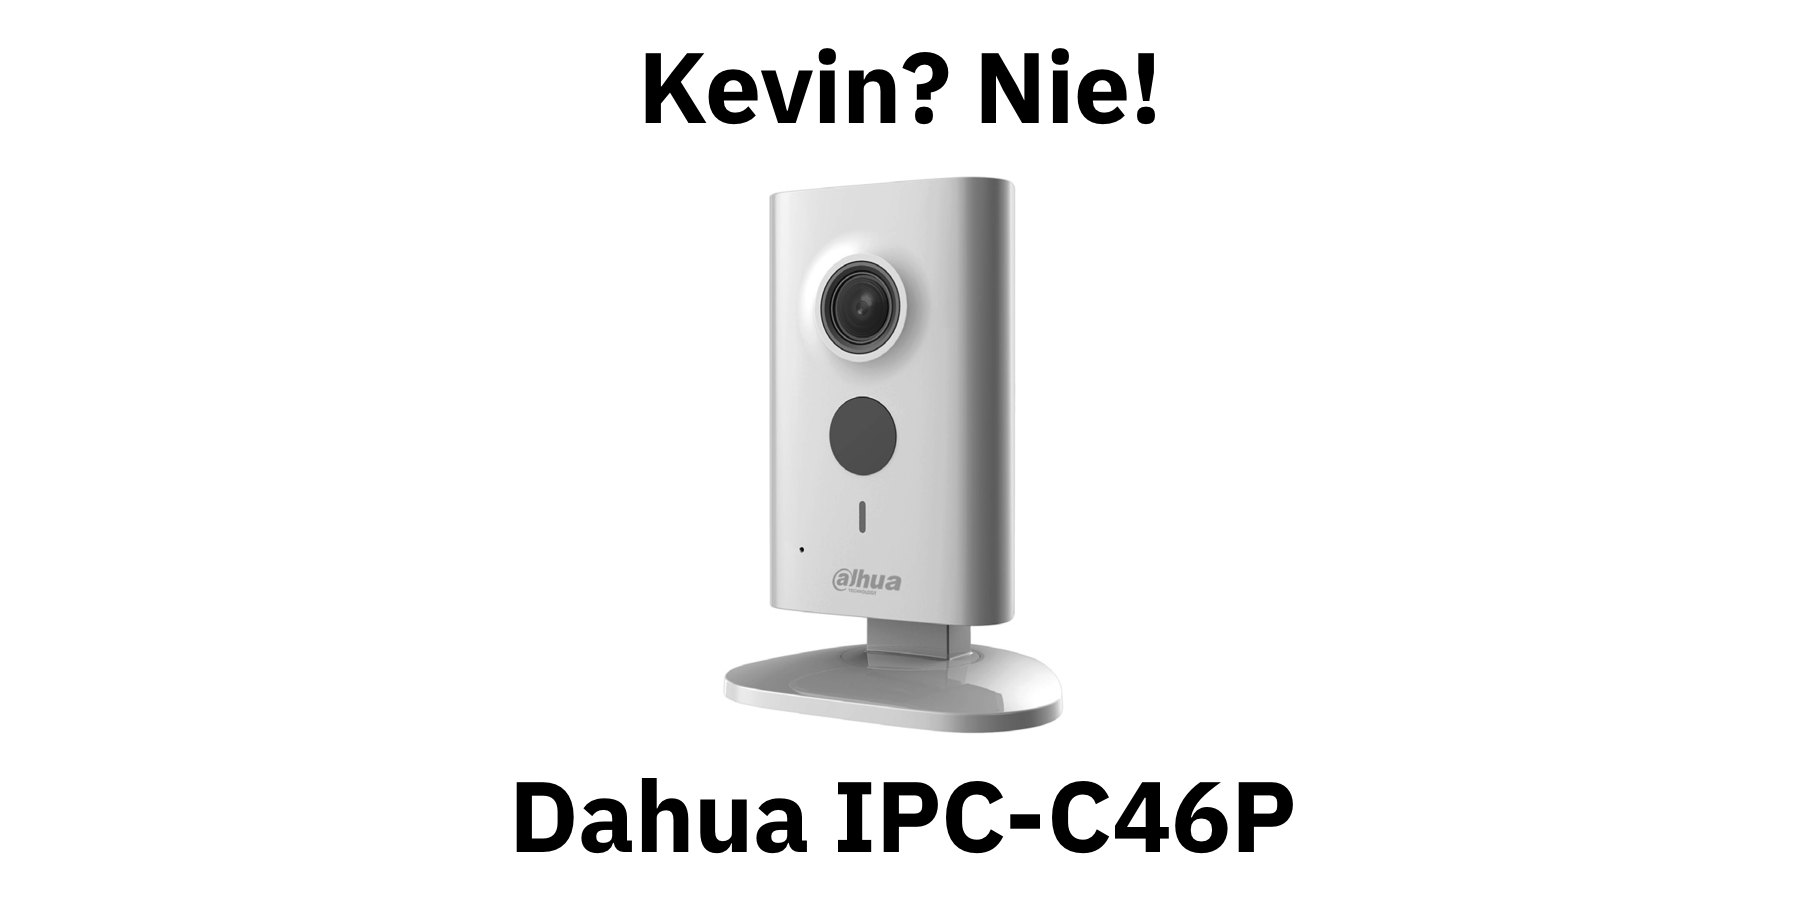 Dahua IPC-C46P - Kevin sam w domu